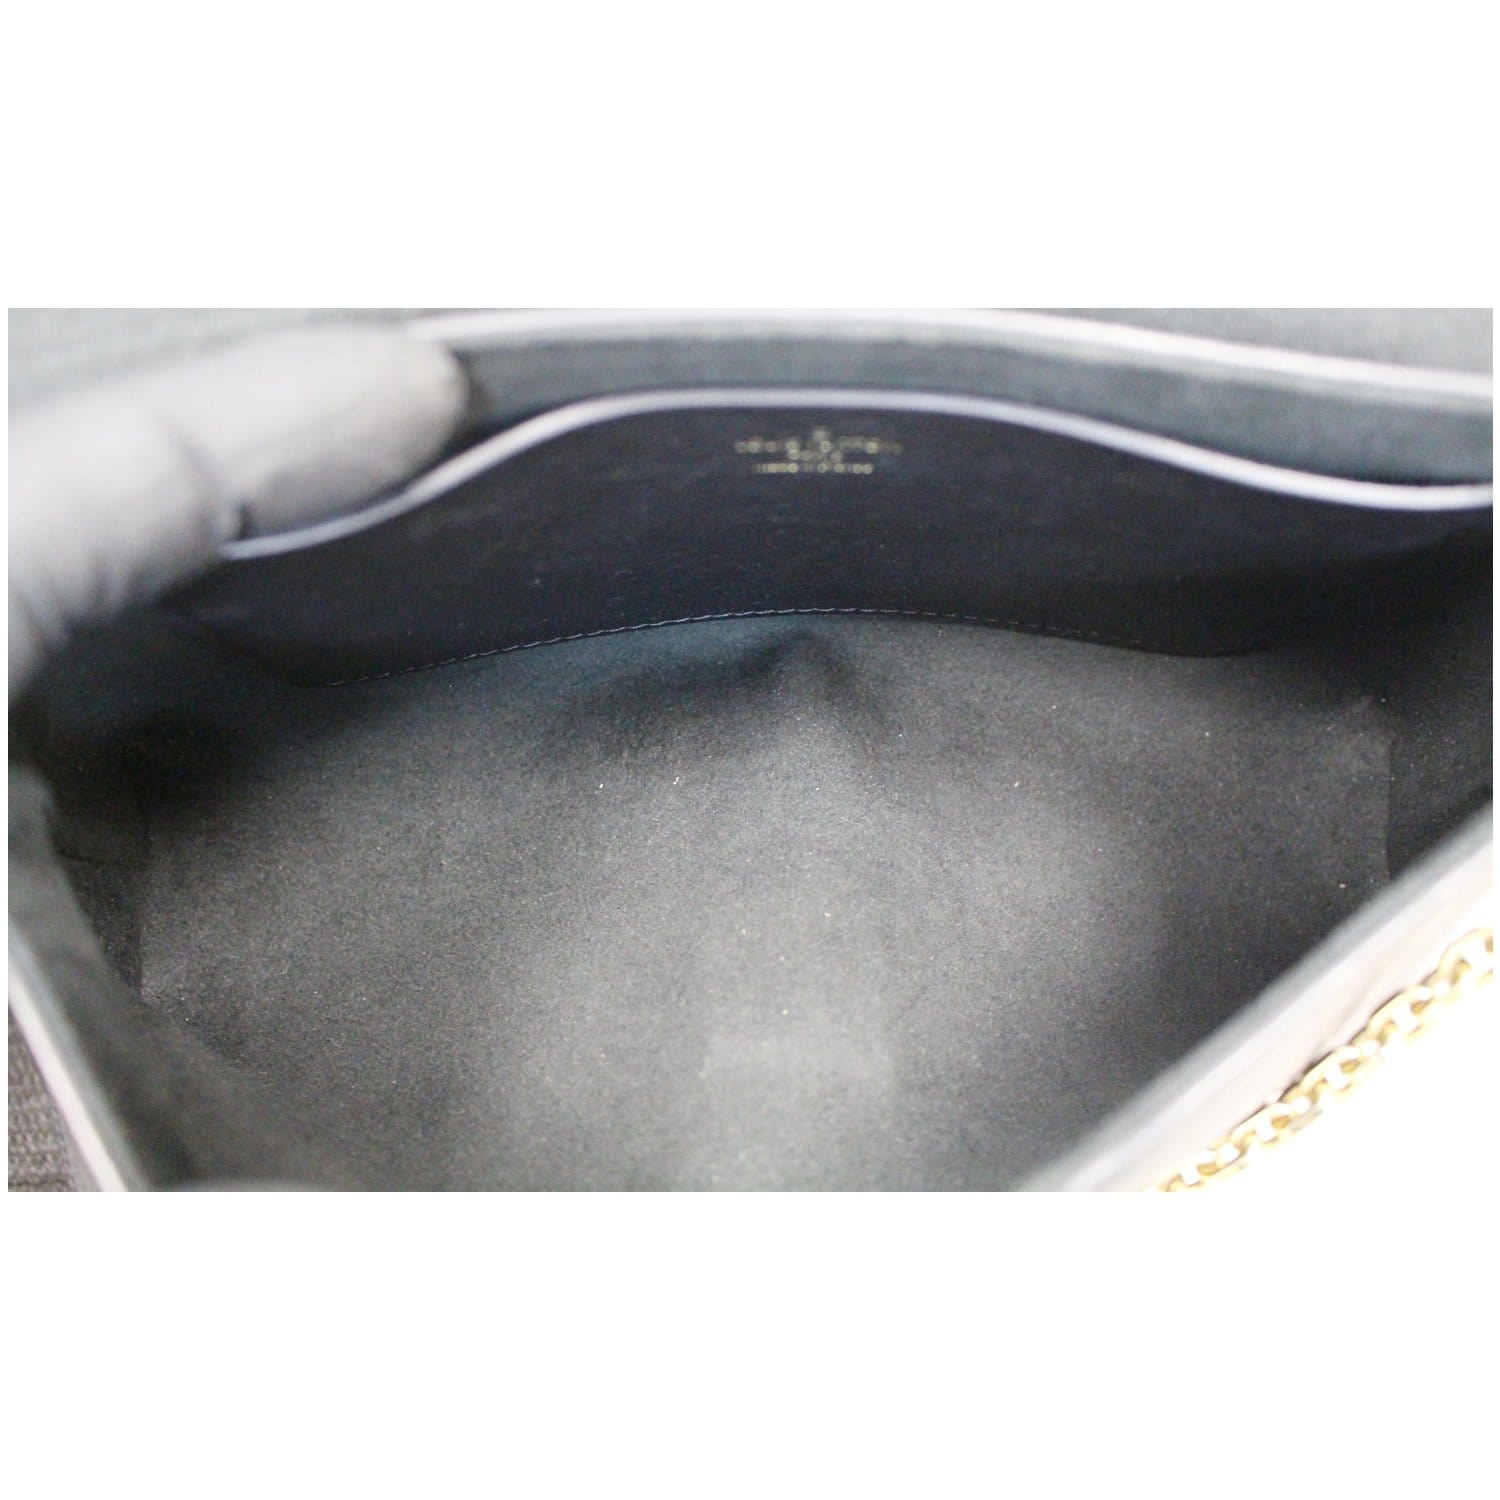 Louis Vuitton Love Note Black Leather Chain Bag